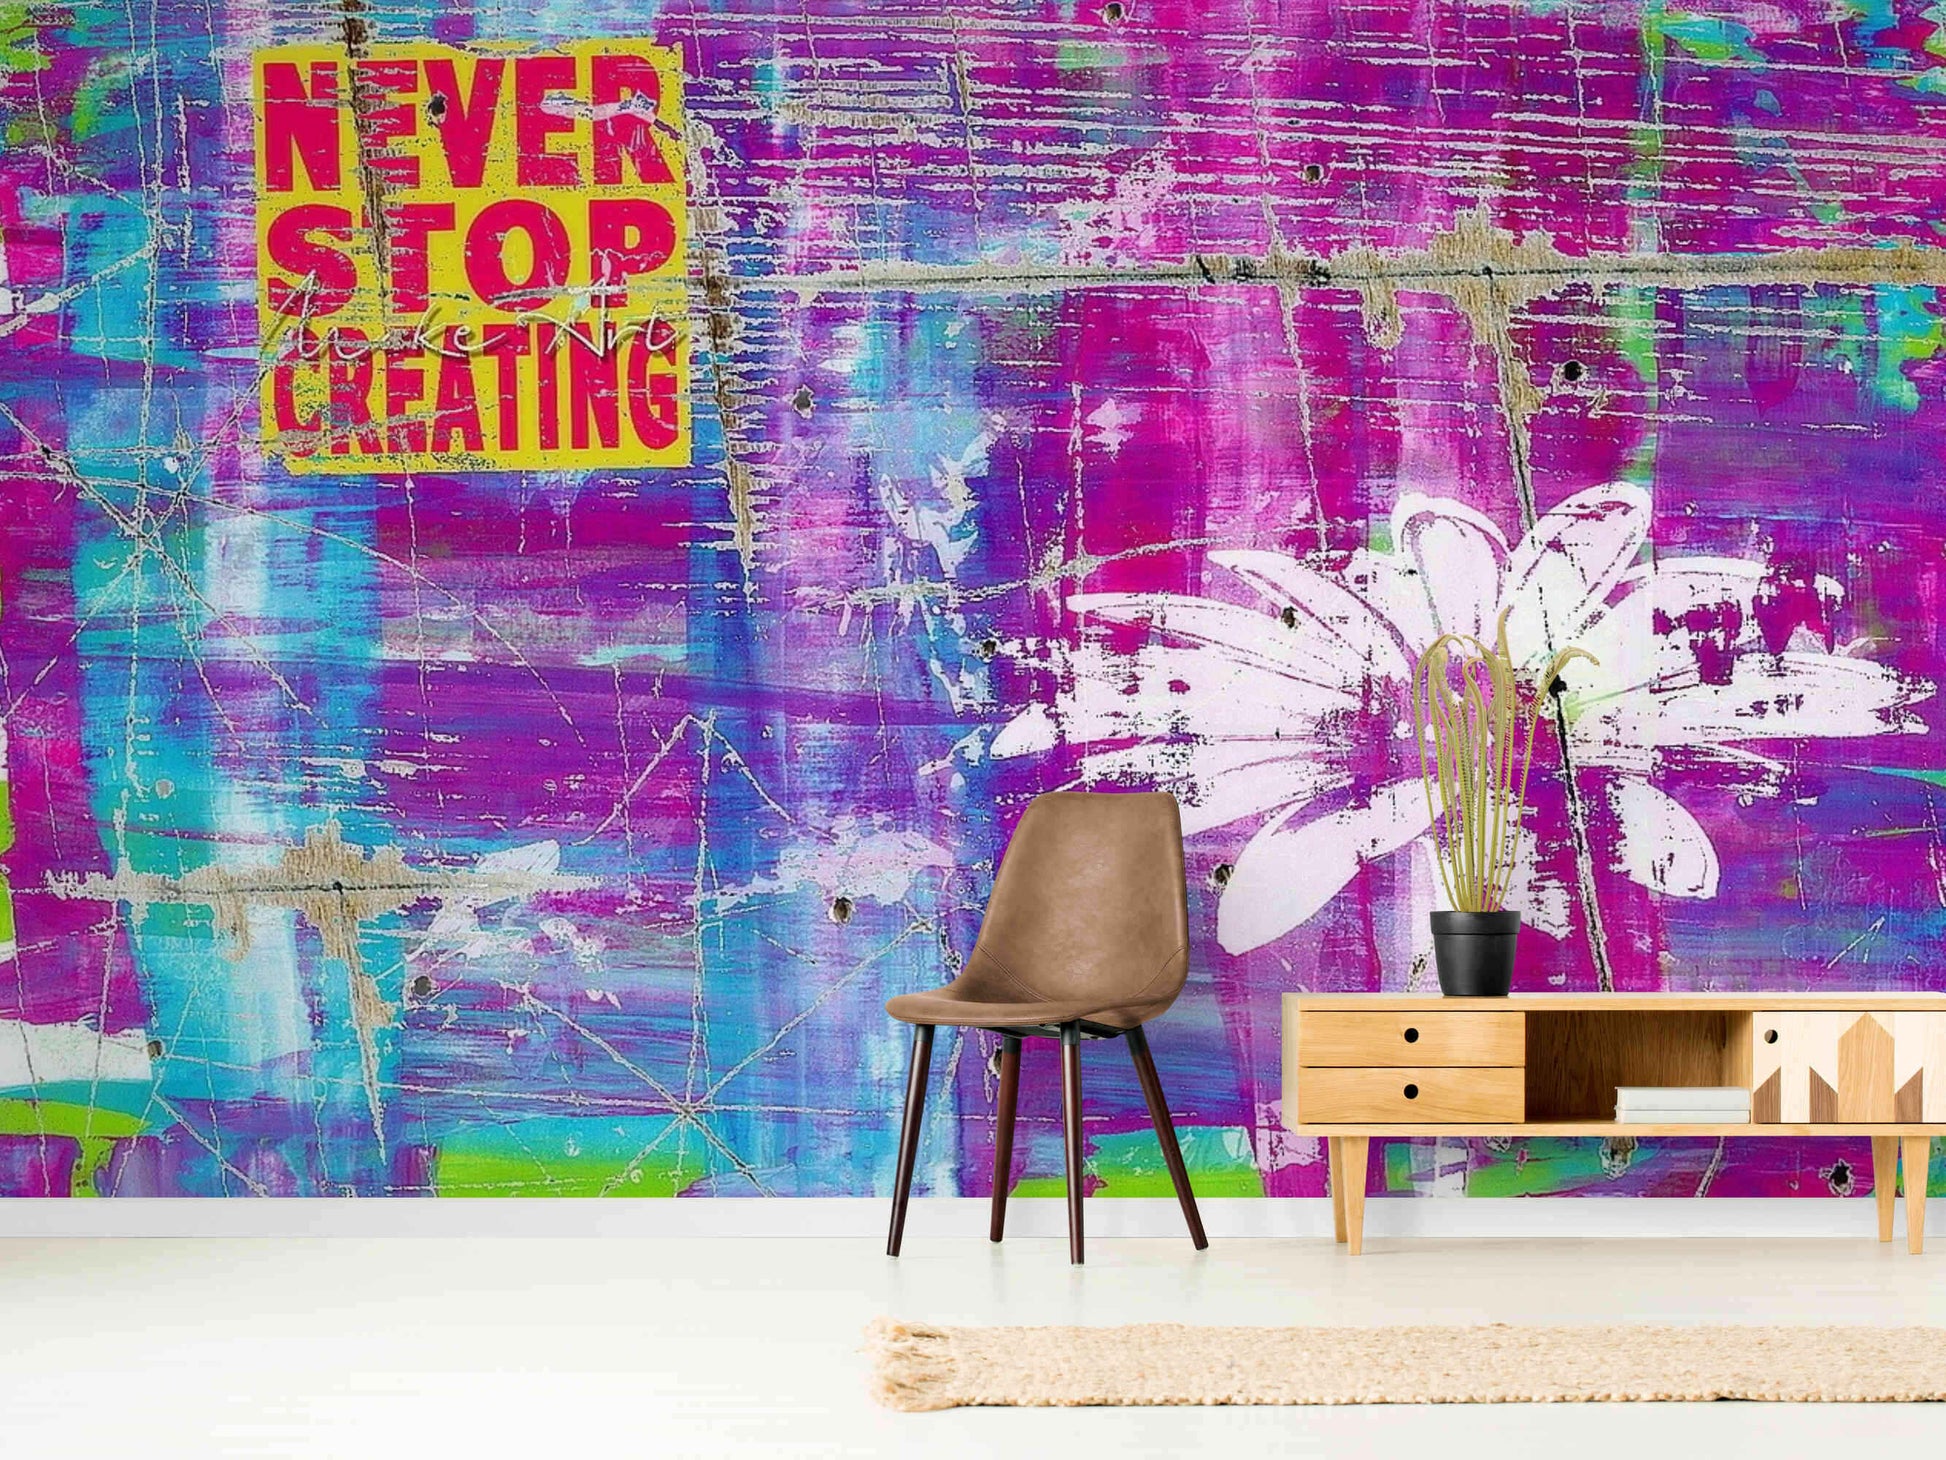  Motivational purple graffiti wallpaper inspiring creativity and artistry.